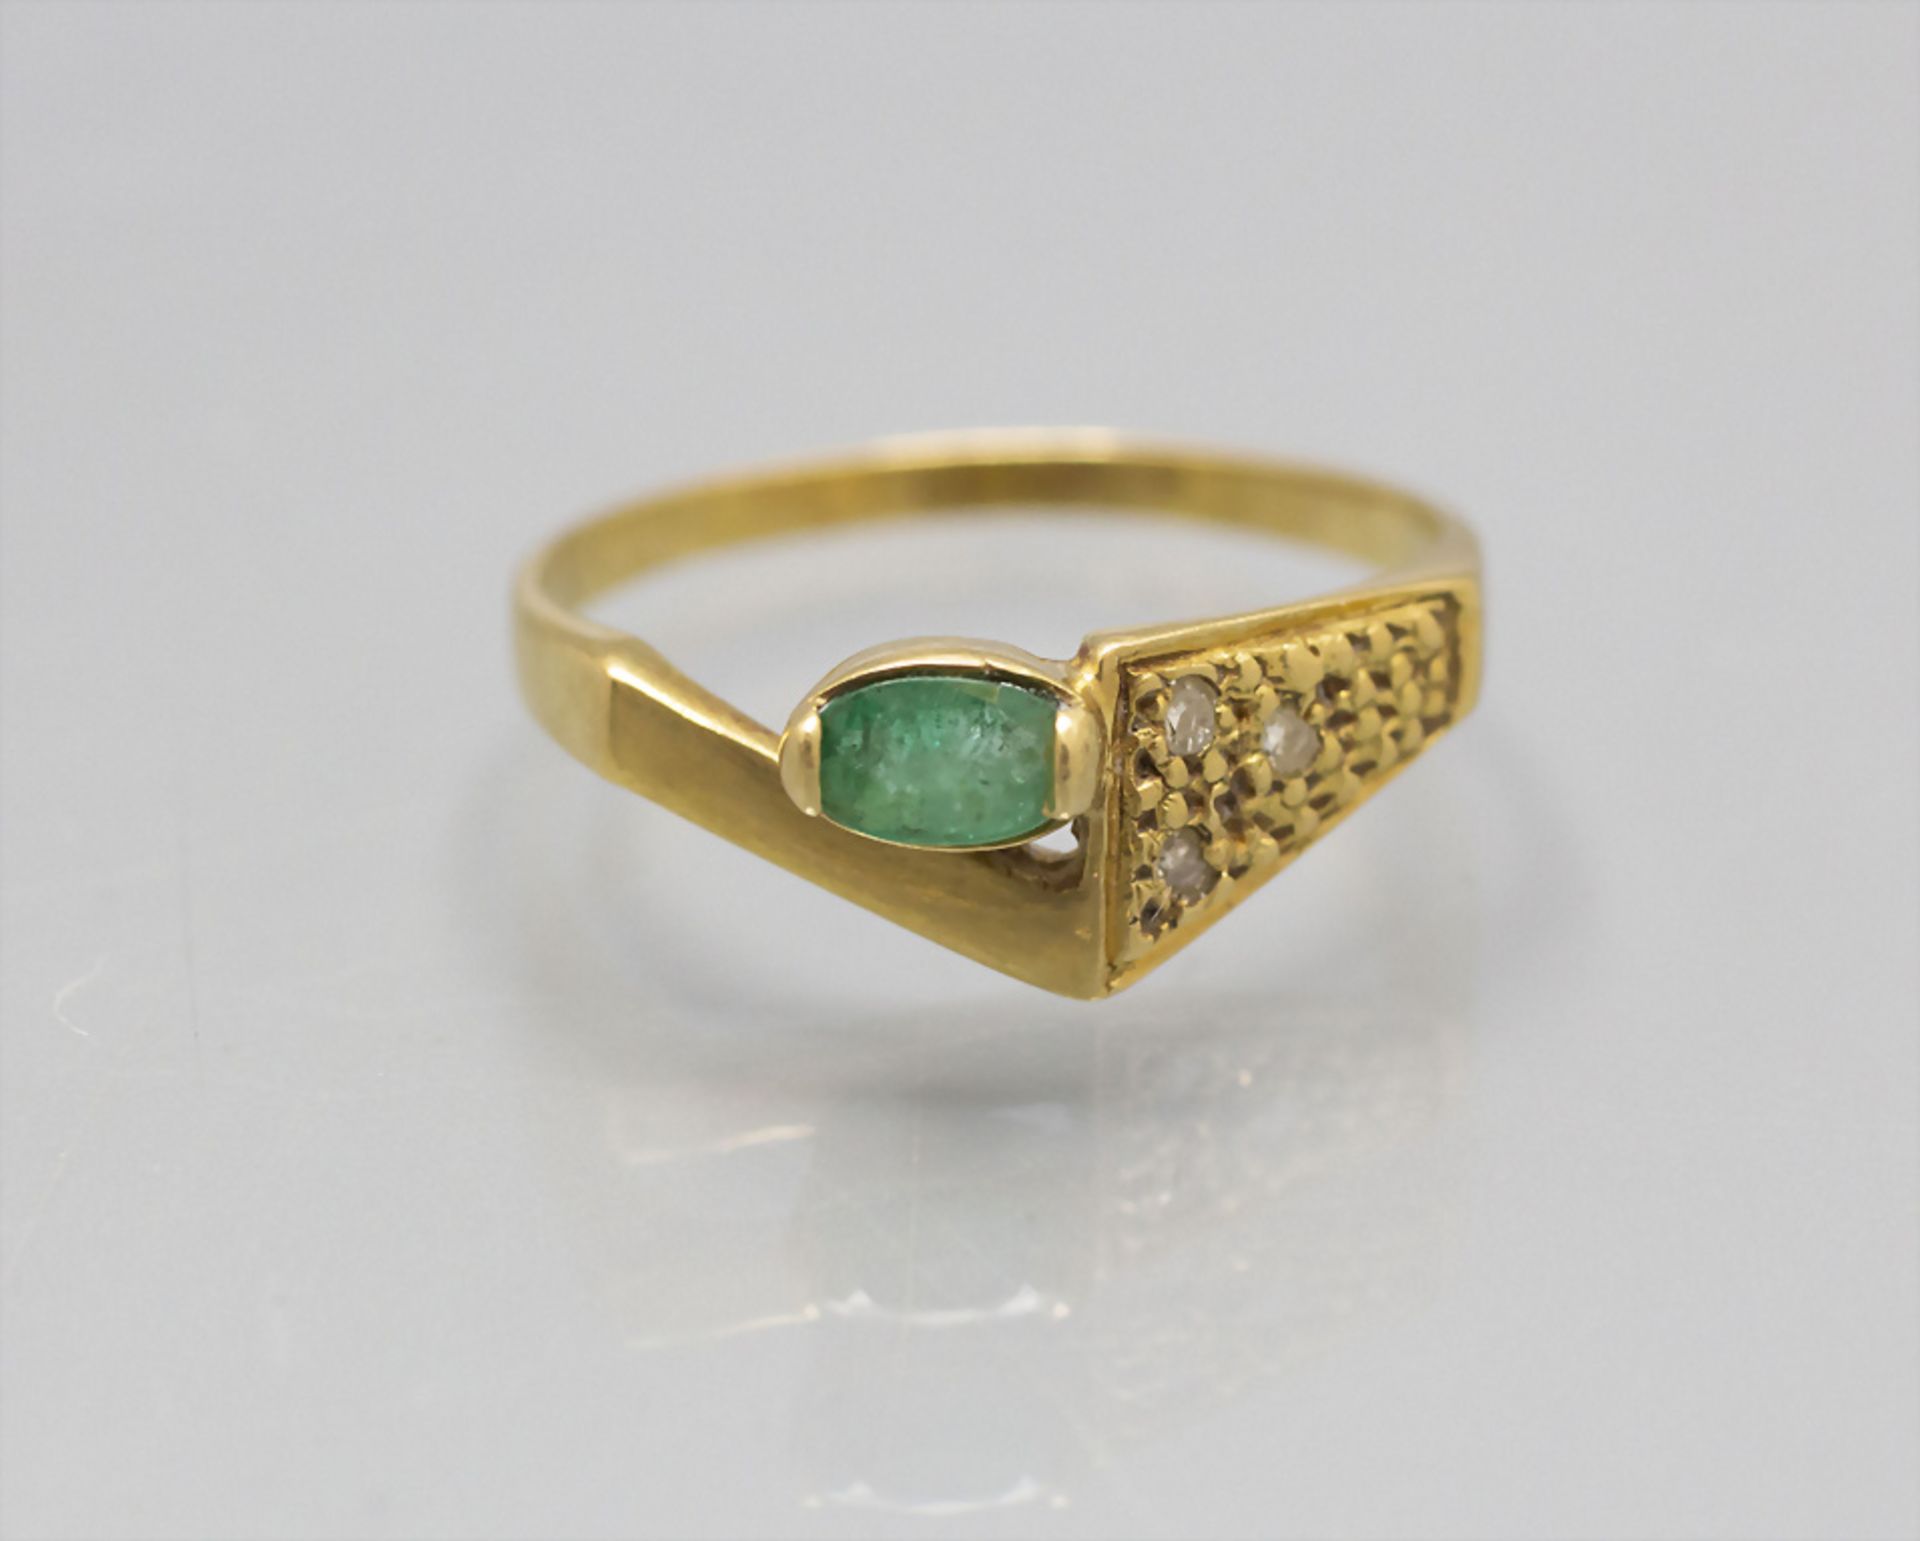 Damenring mit Diamanten und Smaragd / A ladies 18 ct gold ring with diamonds and emeralds